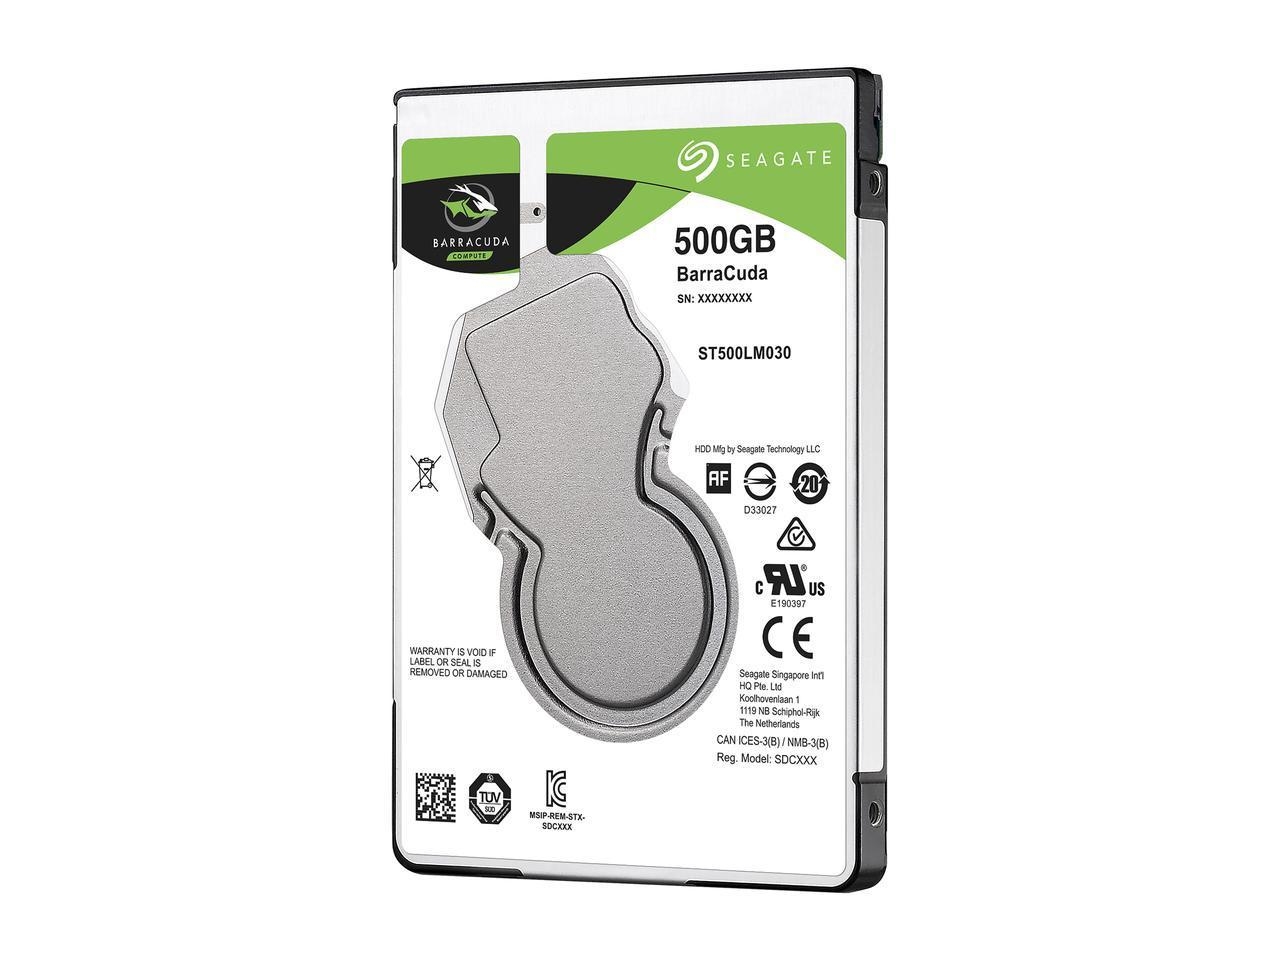 SEAGATE BARRACUDA 500GB 128MB 5400RPM SATA NOTEBOOK HDD (ST500LM030)